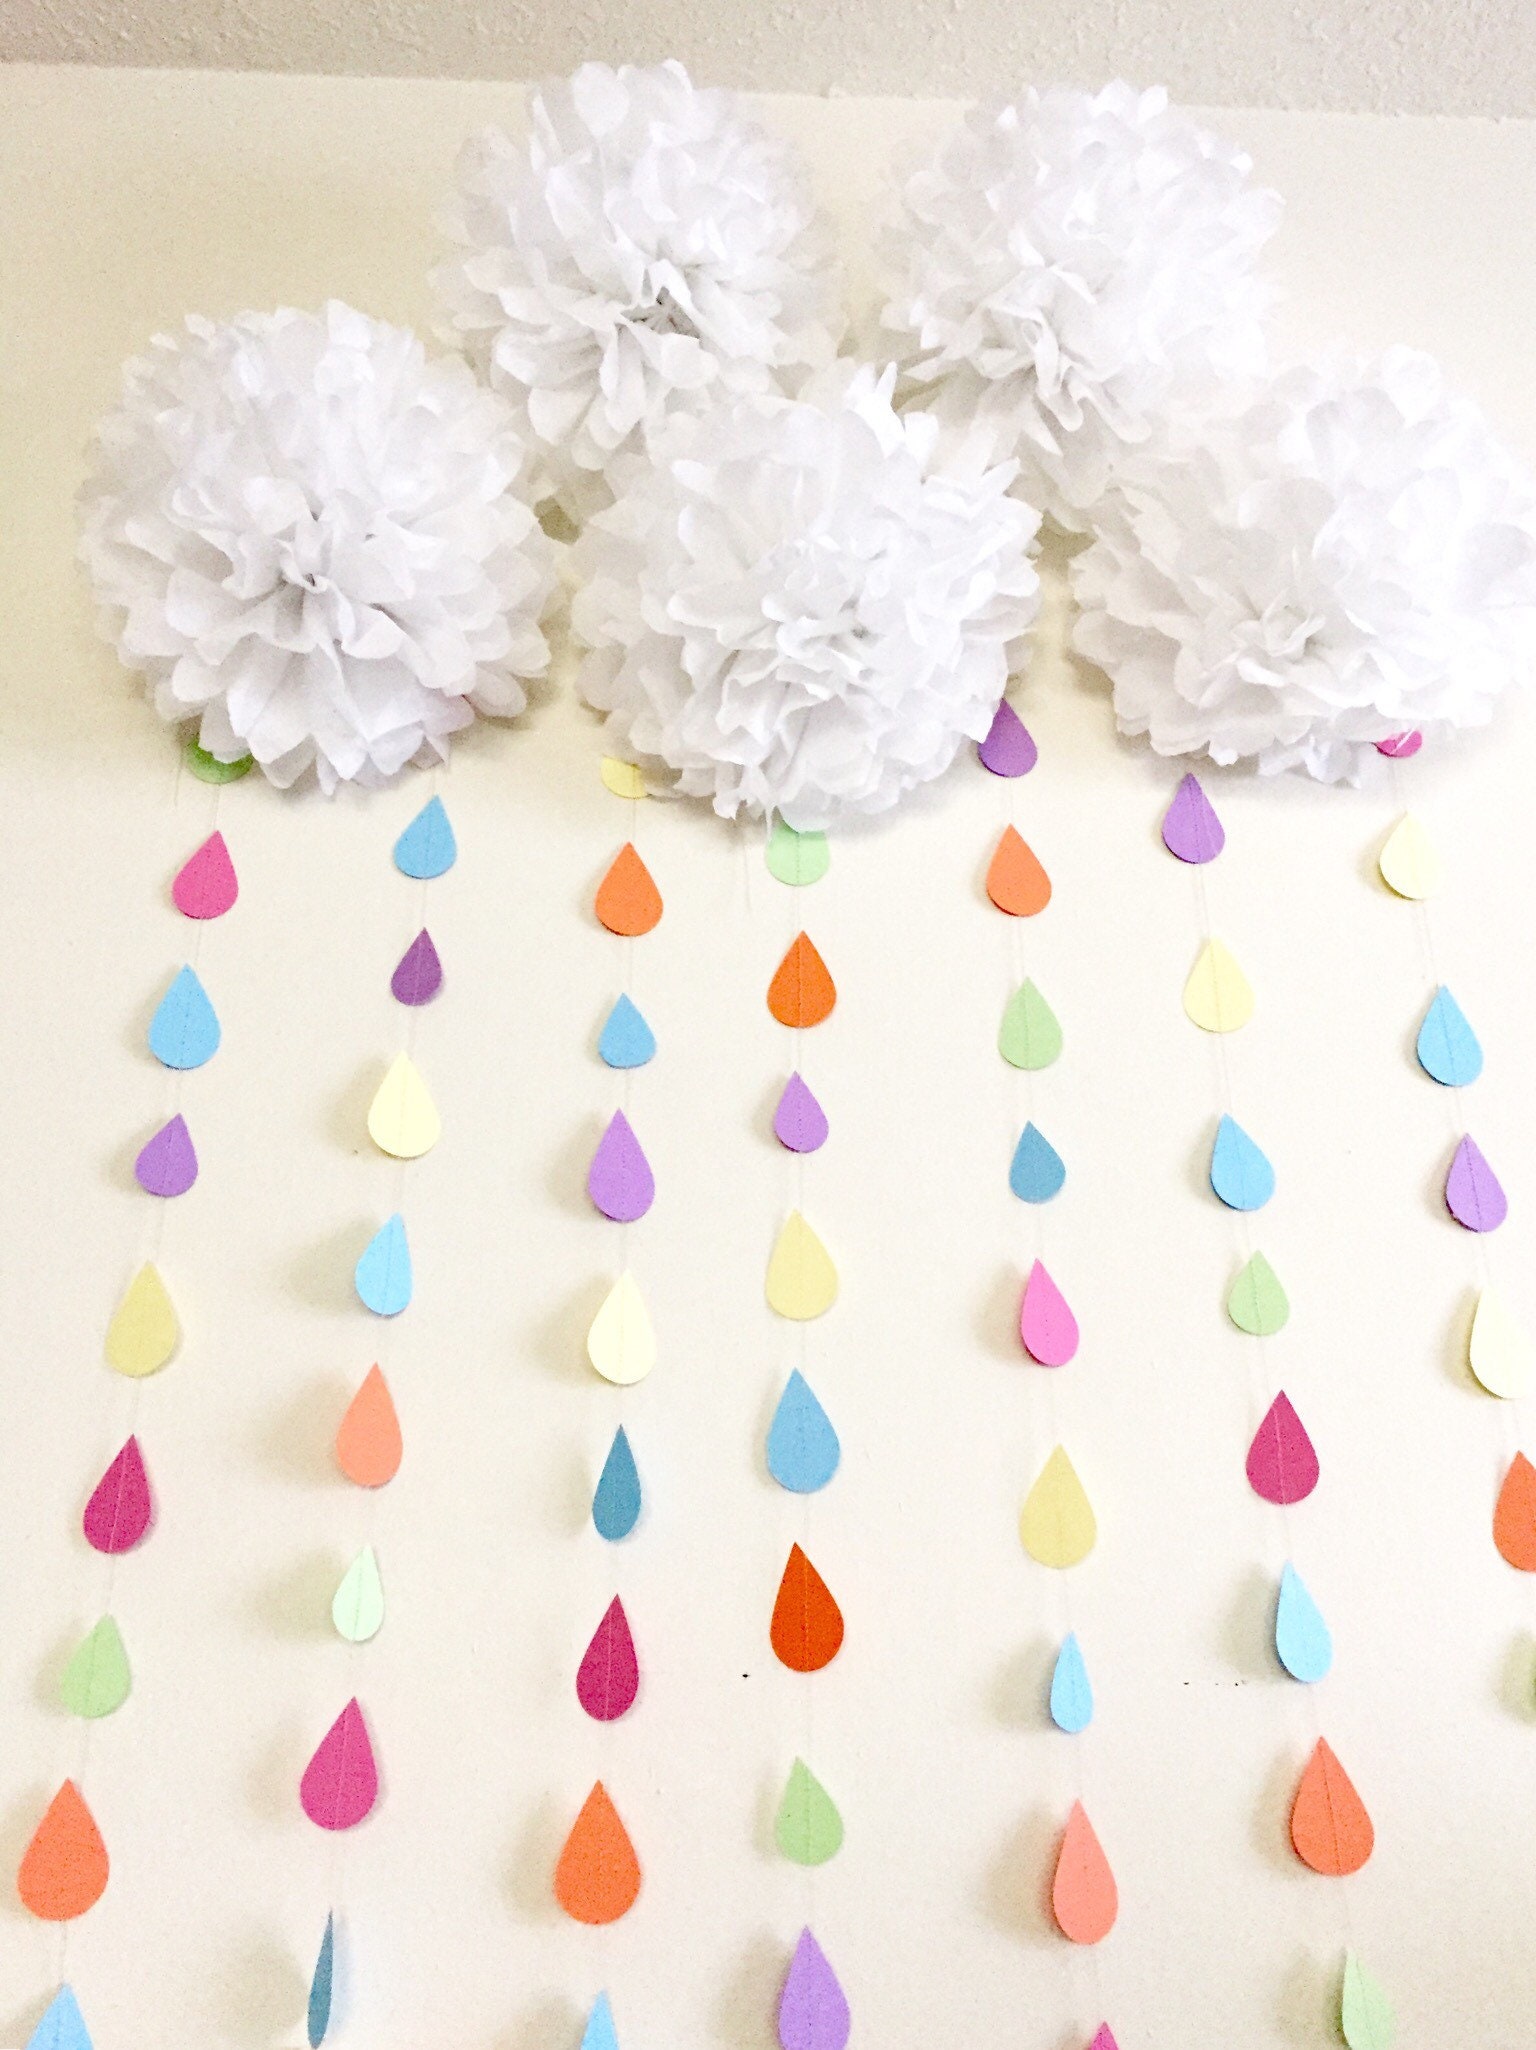 Pastel Rainbow Party-Decorations Supplies Streamers-Garland - 29pcs Baby Shower Birthday Wedding Tissue Pom Poms,Tassel Banner Backdrop Decor